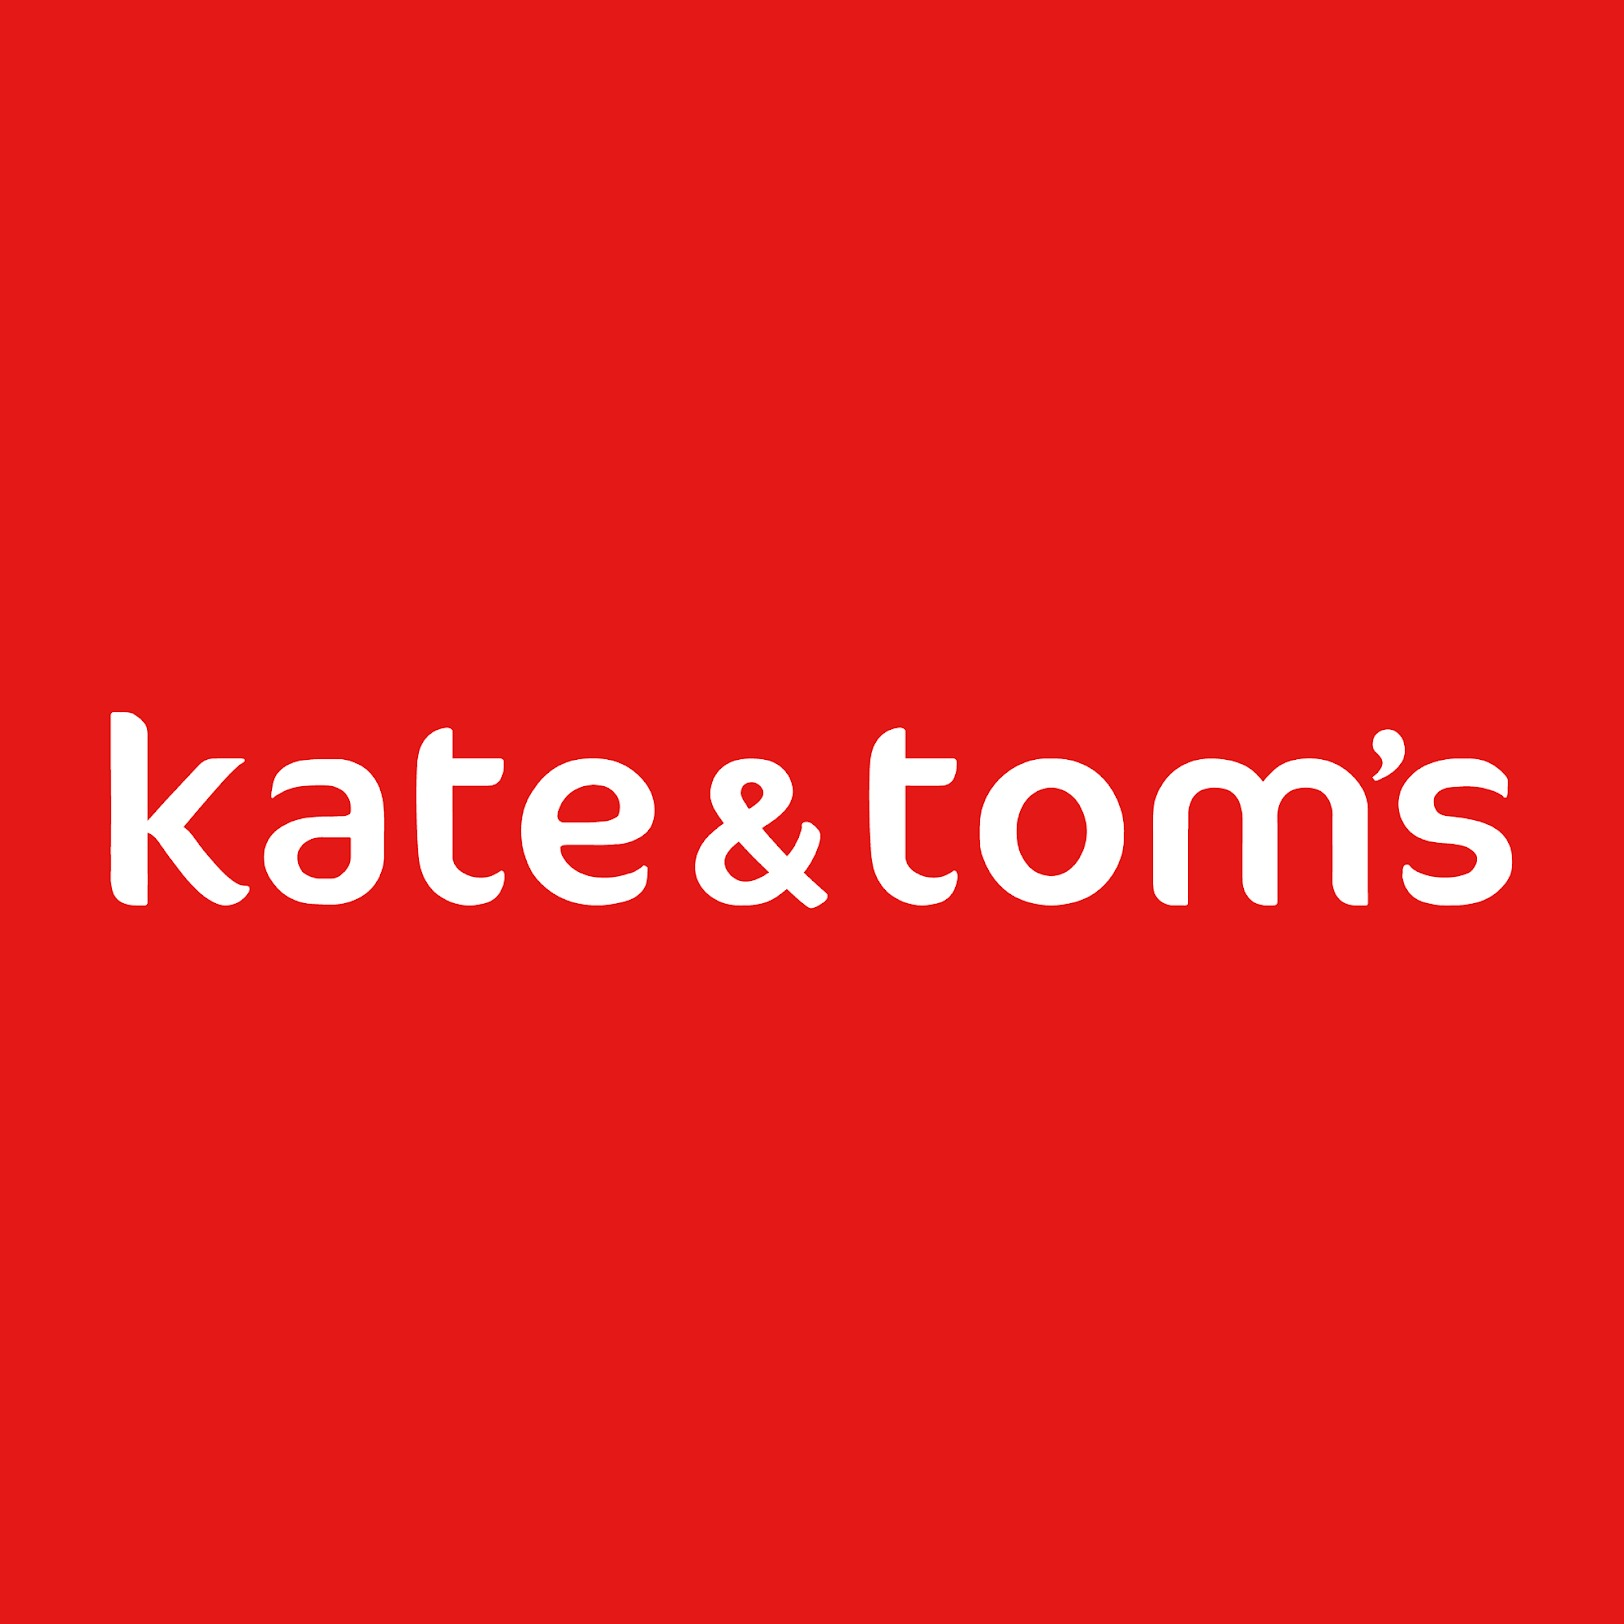 kate & tom's Logo